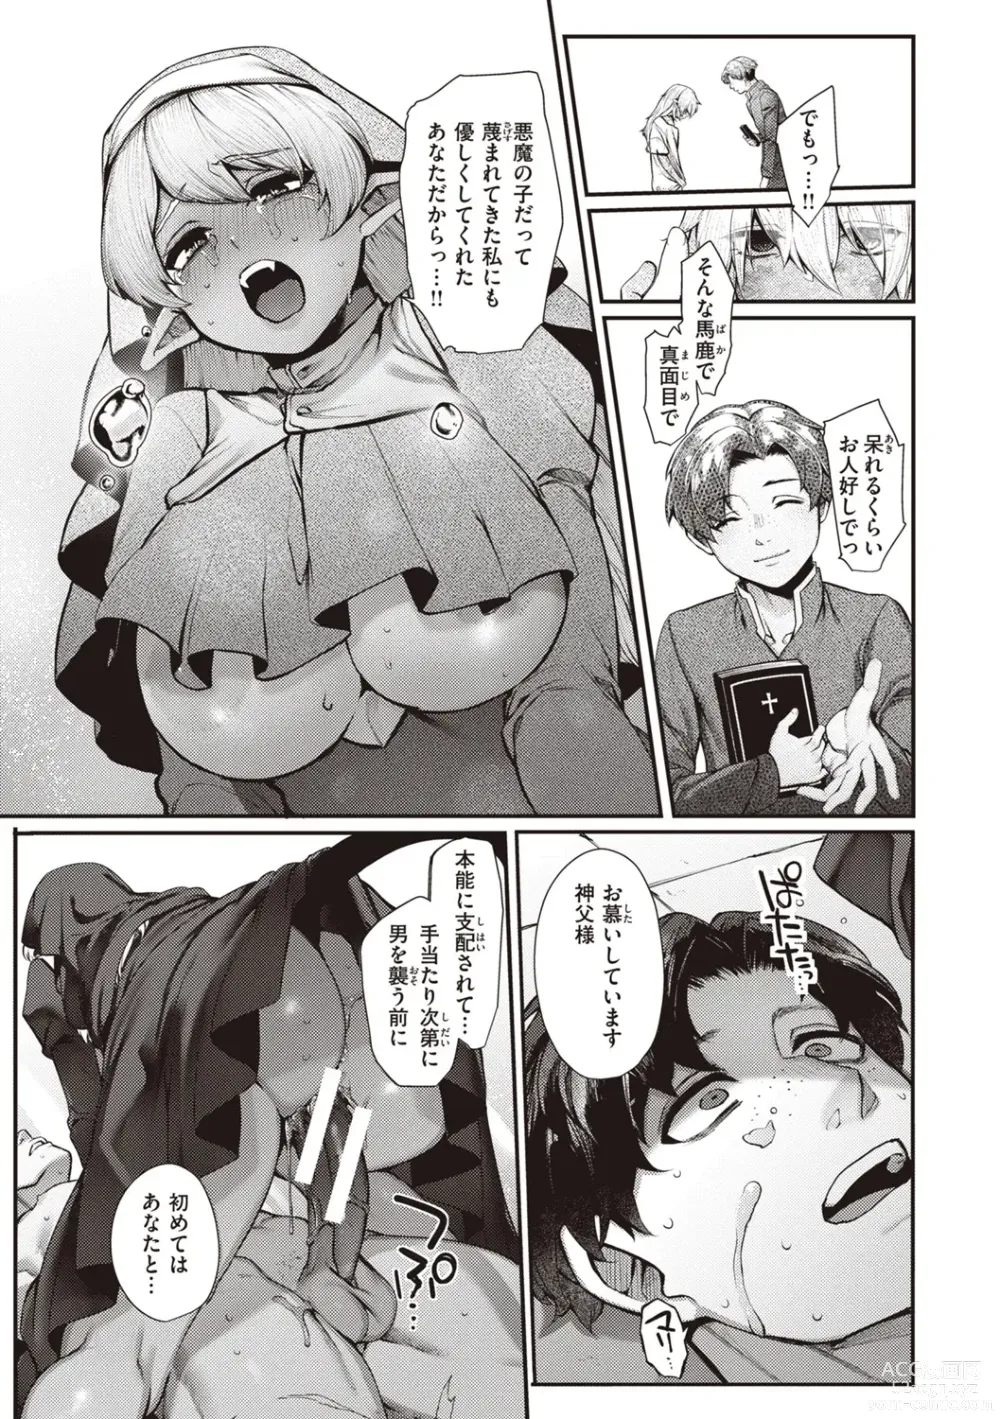 Page 161 of manga DA-DA-MO-RE